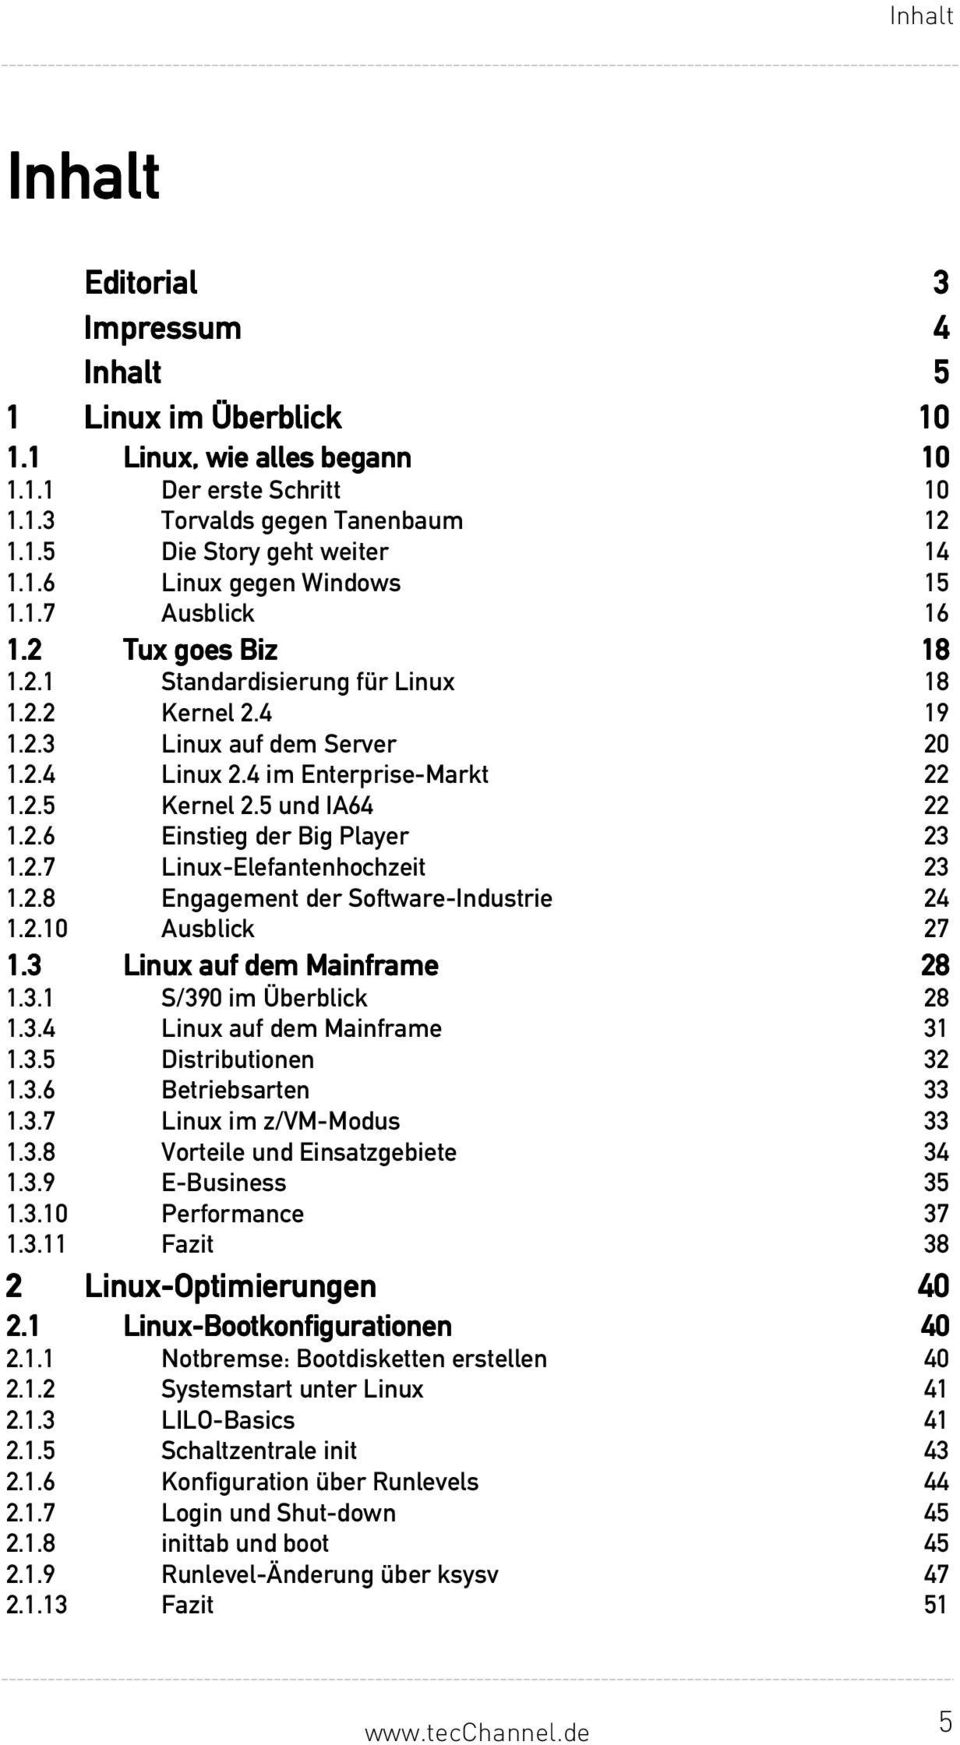 2.7 Linux-Elefantenhochzeit 23 1.2.8 Engagement der Software-Industrie 24 1.2.10 Ausblick 27 1.3 Linux auf dem Mainframe 28 1.3.1 S/390 im Überblick 28 1.3.4 Linux auf dem Mainframe 31 1.3.5 Distributionen 32 1.